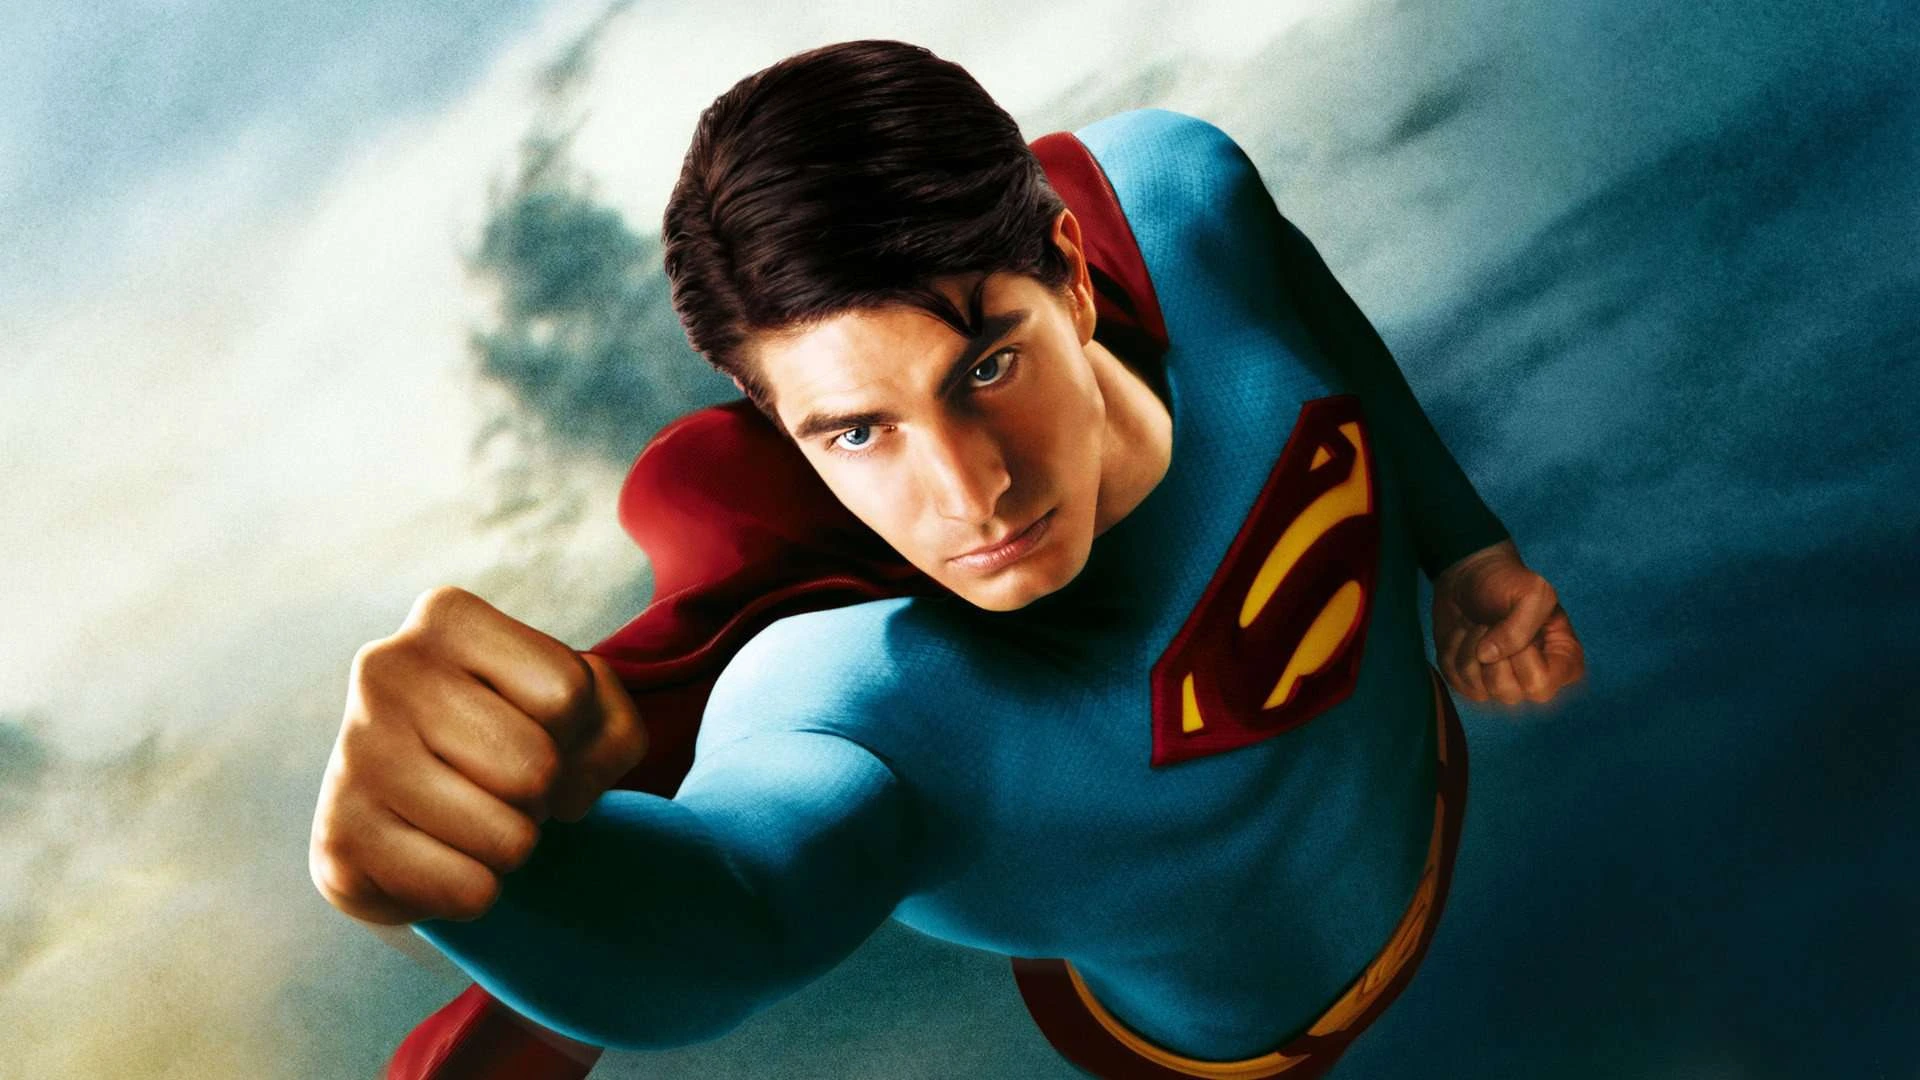 Urutan Film Superman Lengkap dari Awal hingga Bergabung di Justice League